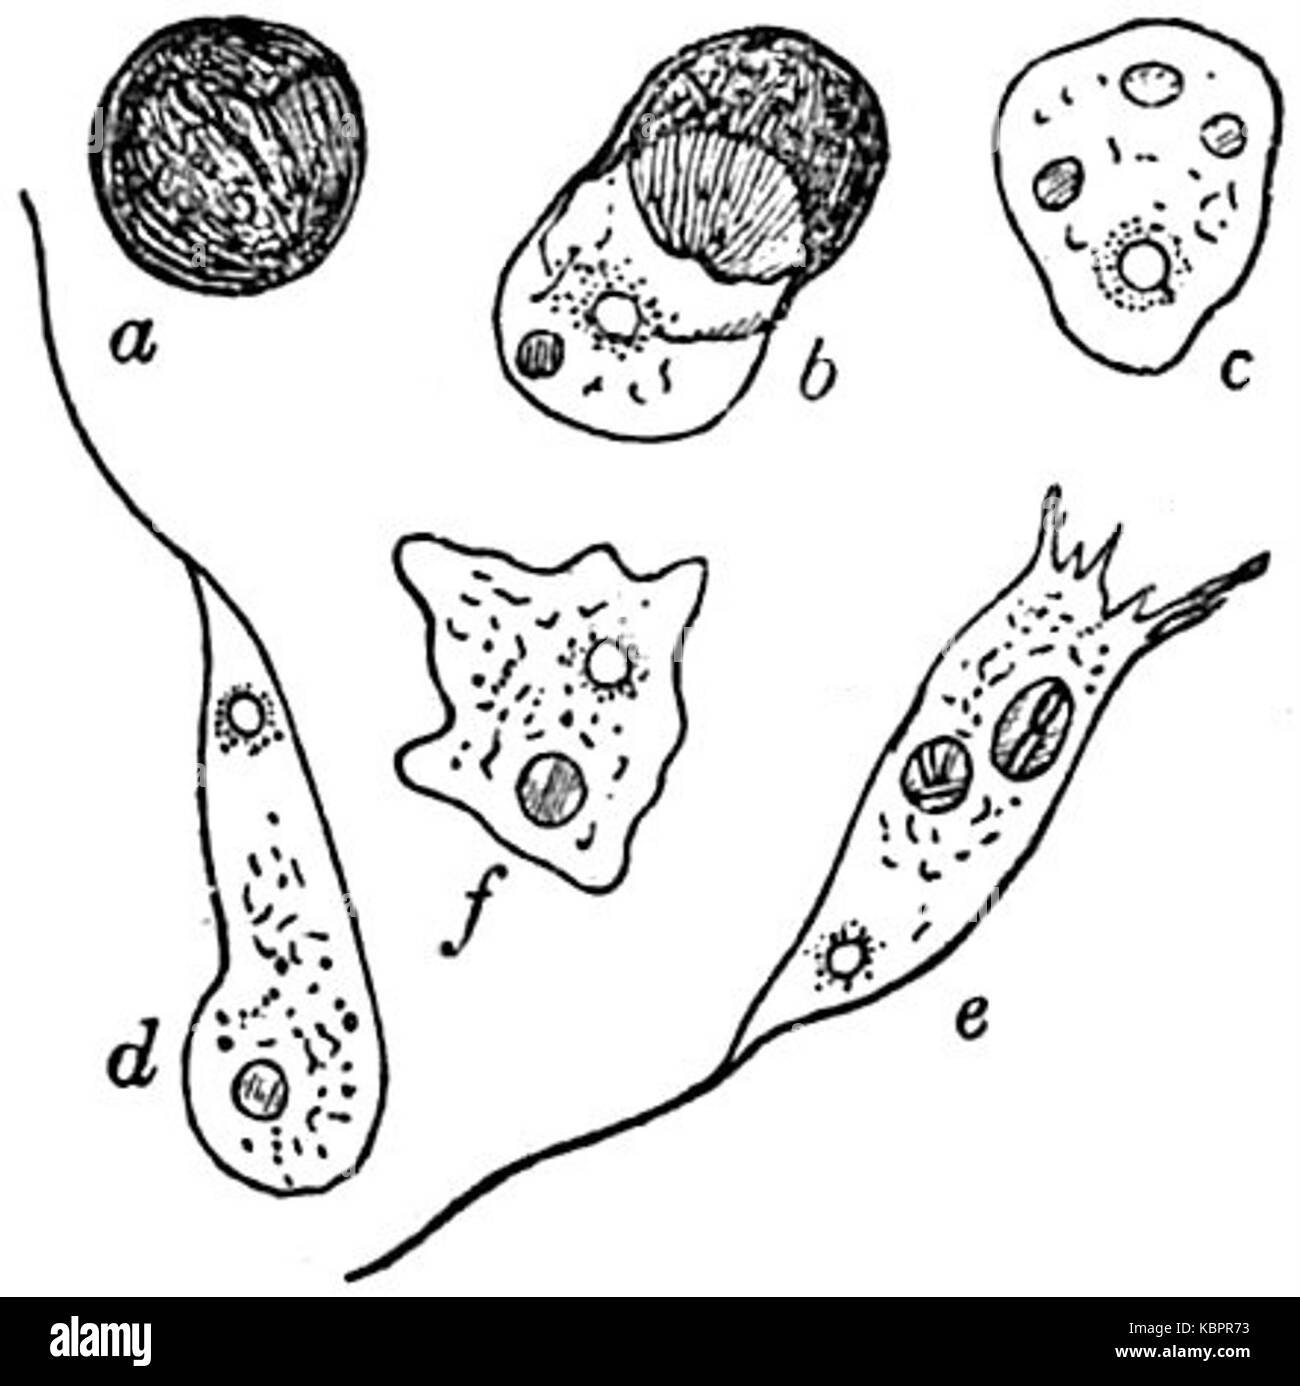 EB1911 Mycetozoa   Didymium difforme   hatching of the spores Stock Photo